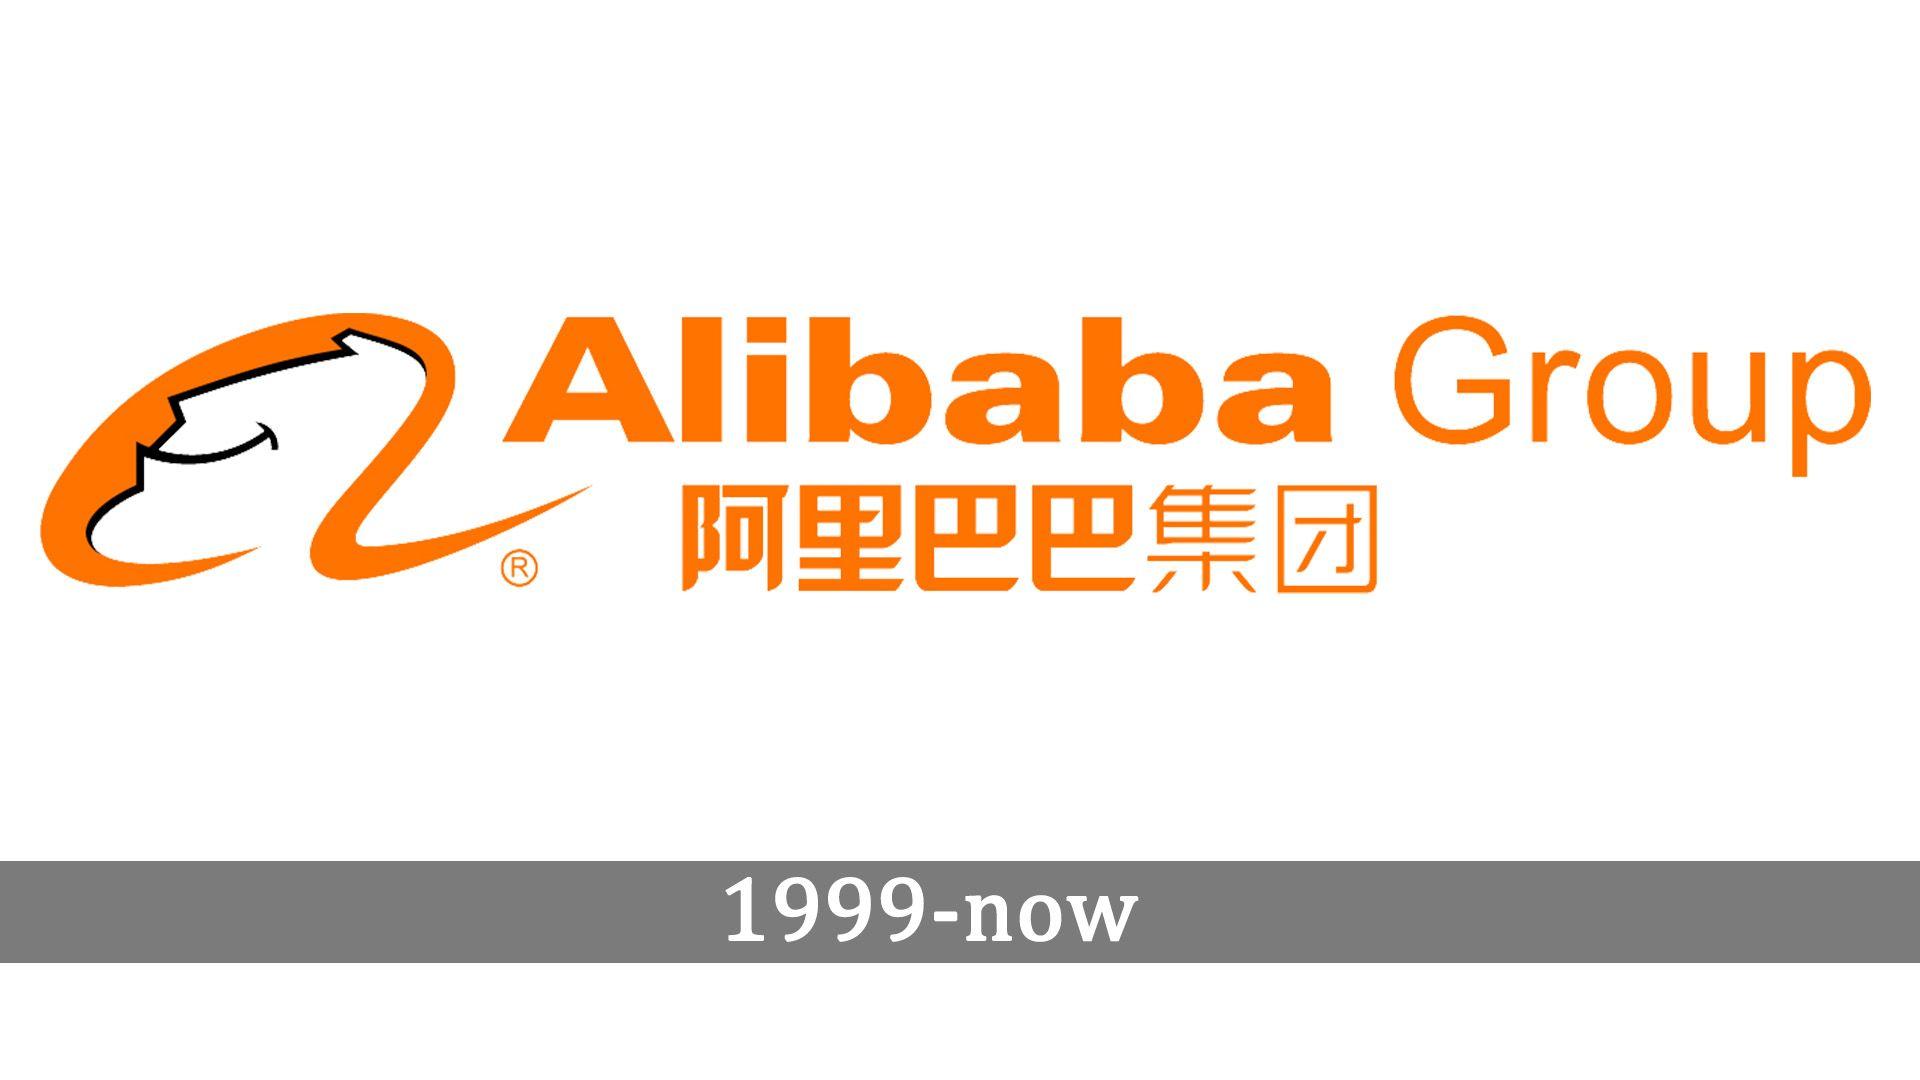 Alibaba Group Logo - Alibaba logo, symbol, meaning, History and Evolution